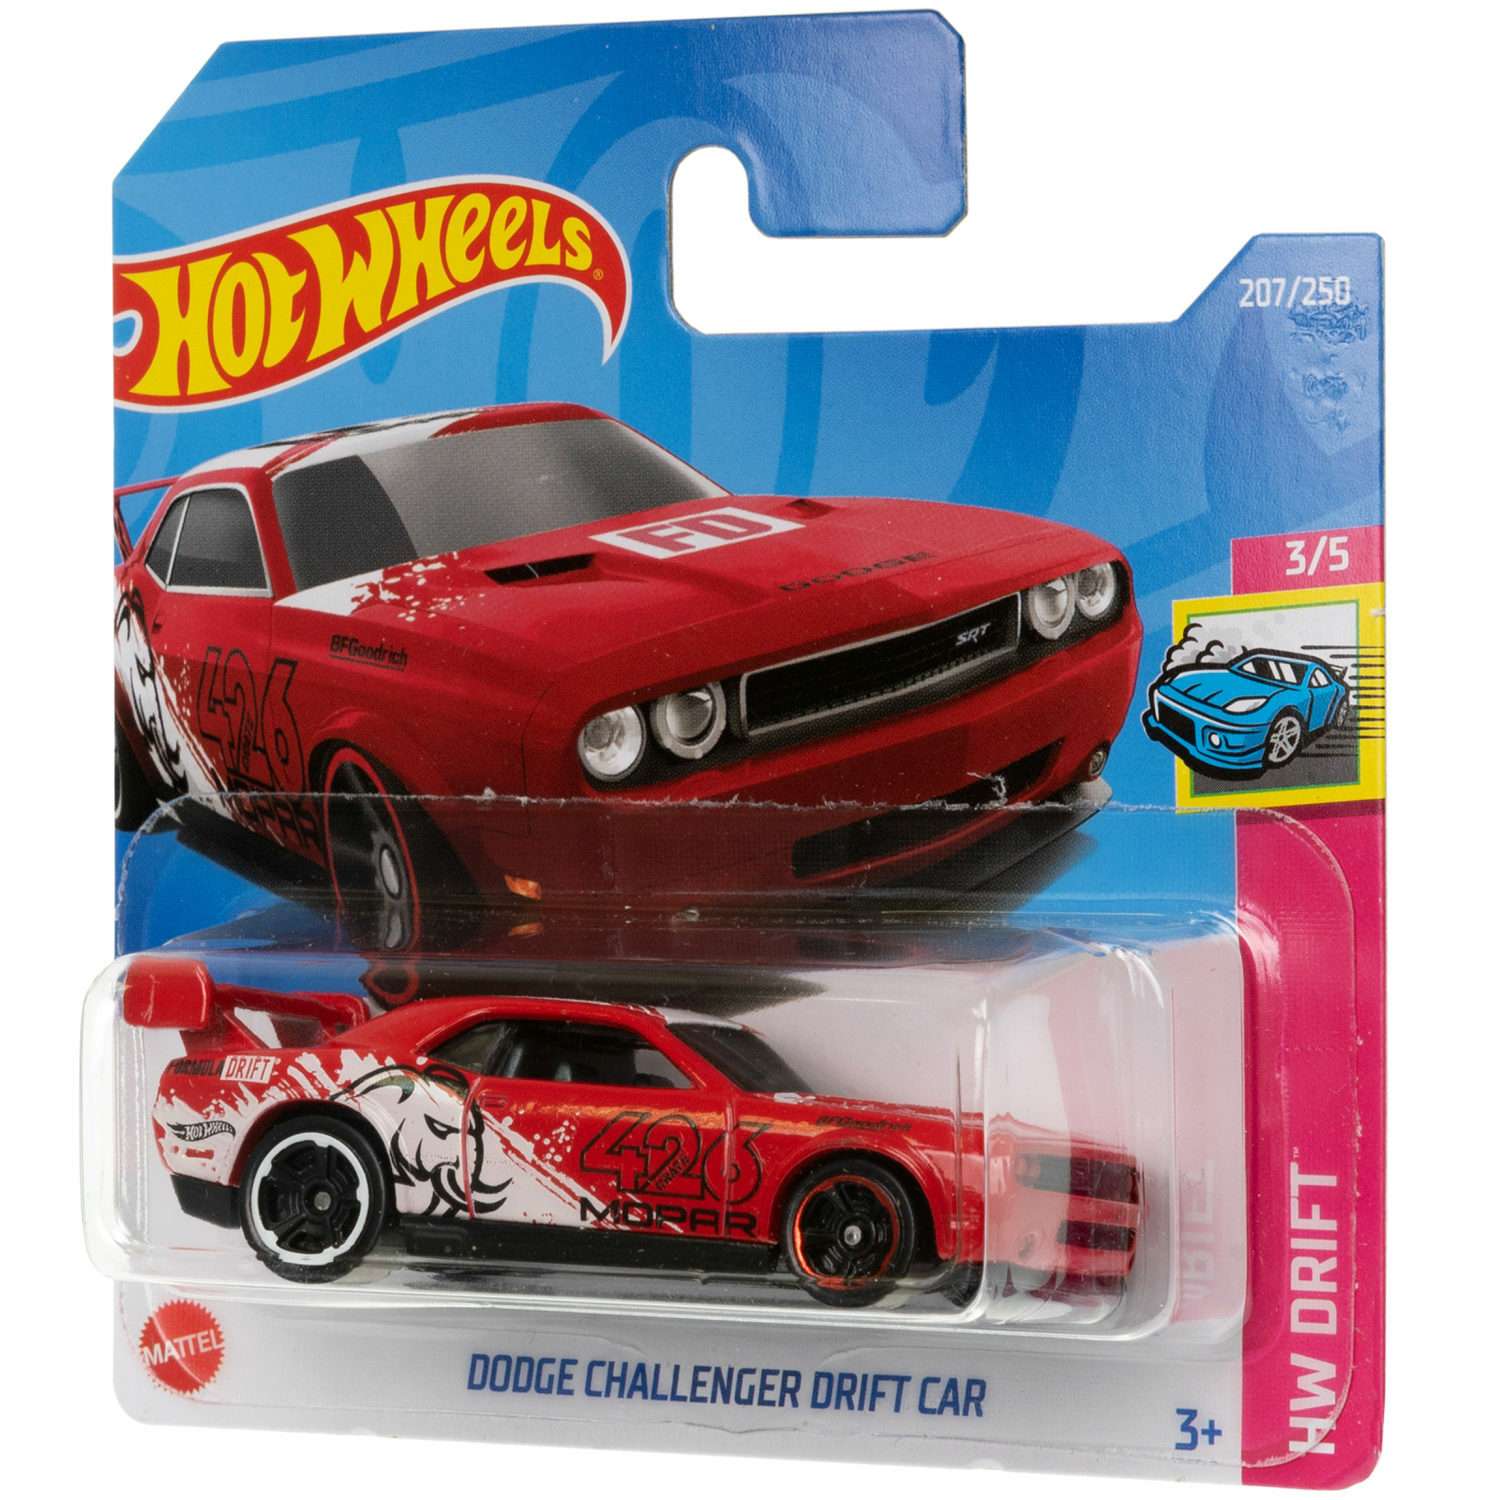 Коллекционная машинка Hot Wheels Dodge challenger drift car 5785-123 - фото 7